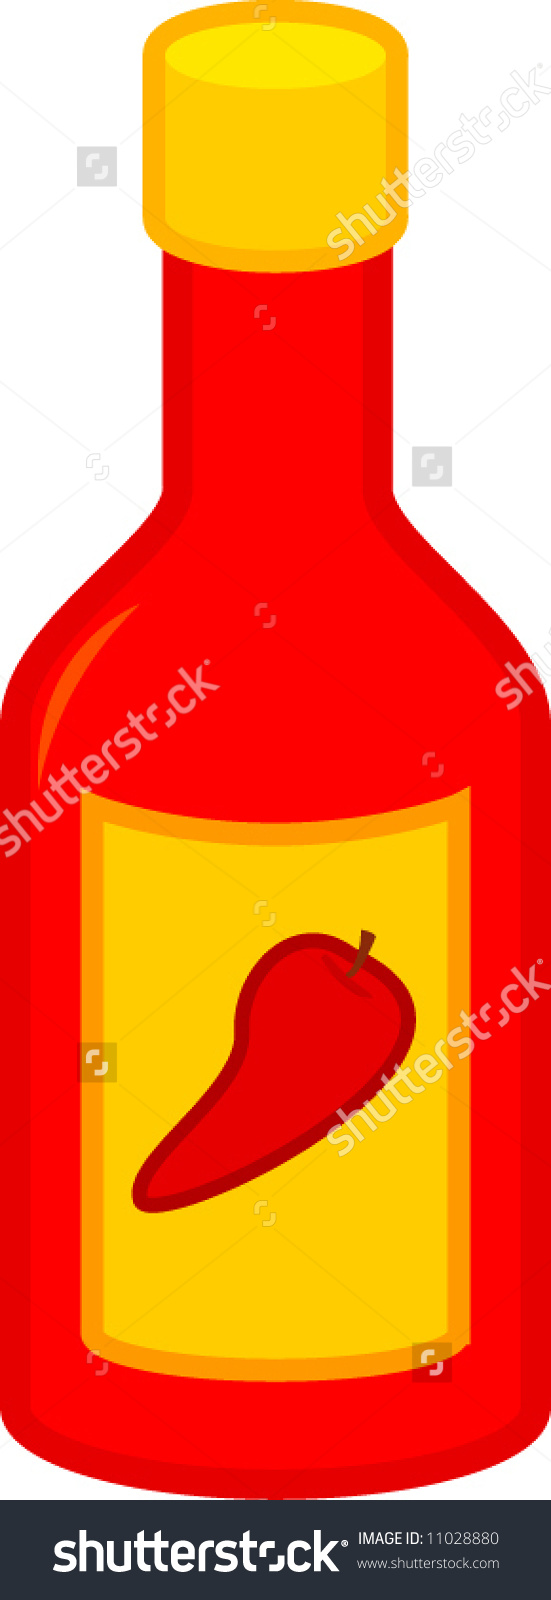 Hot Sauce Bottle Stock Vector 11028880.